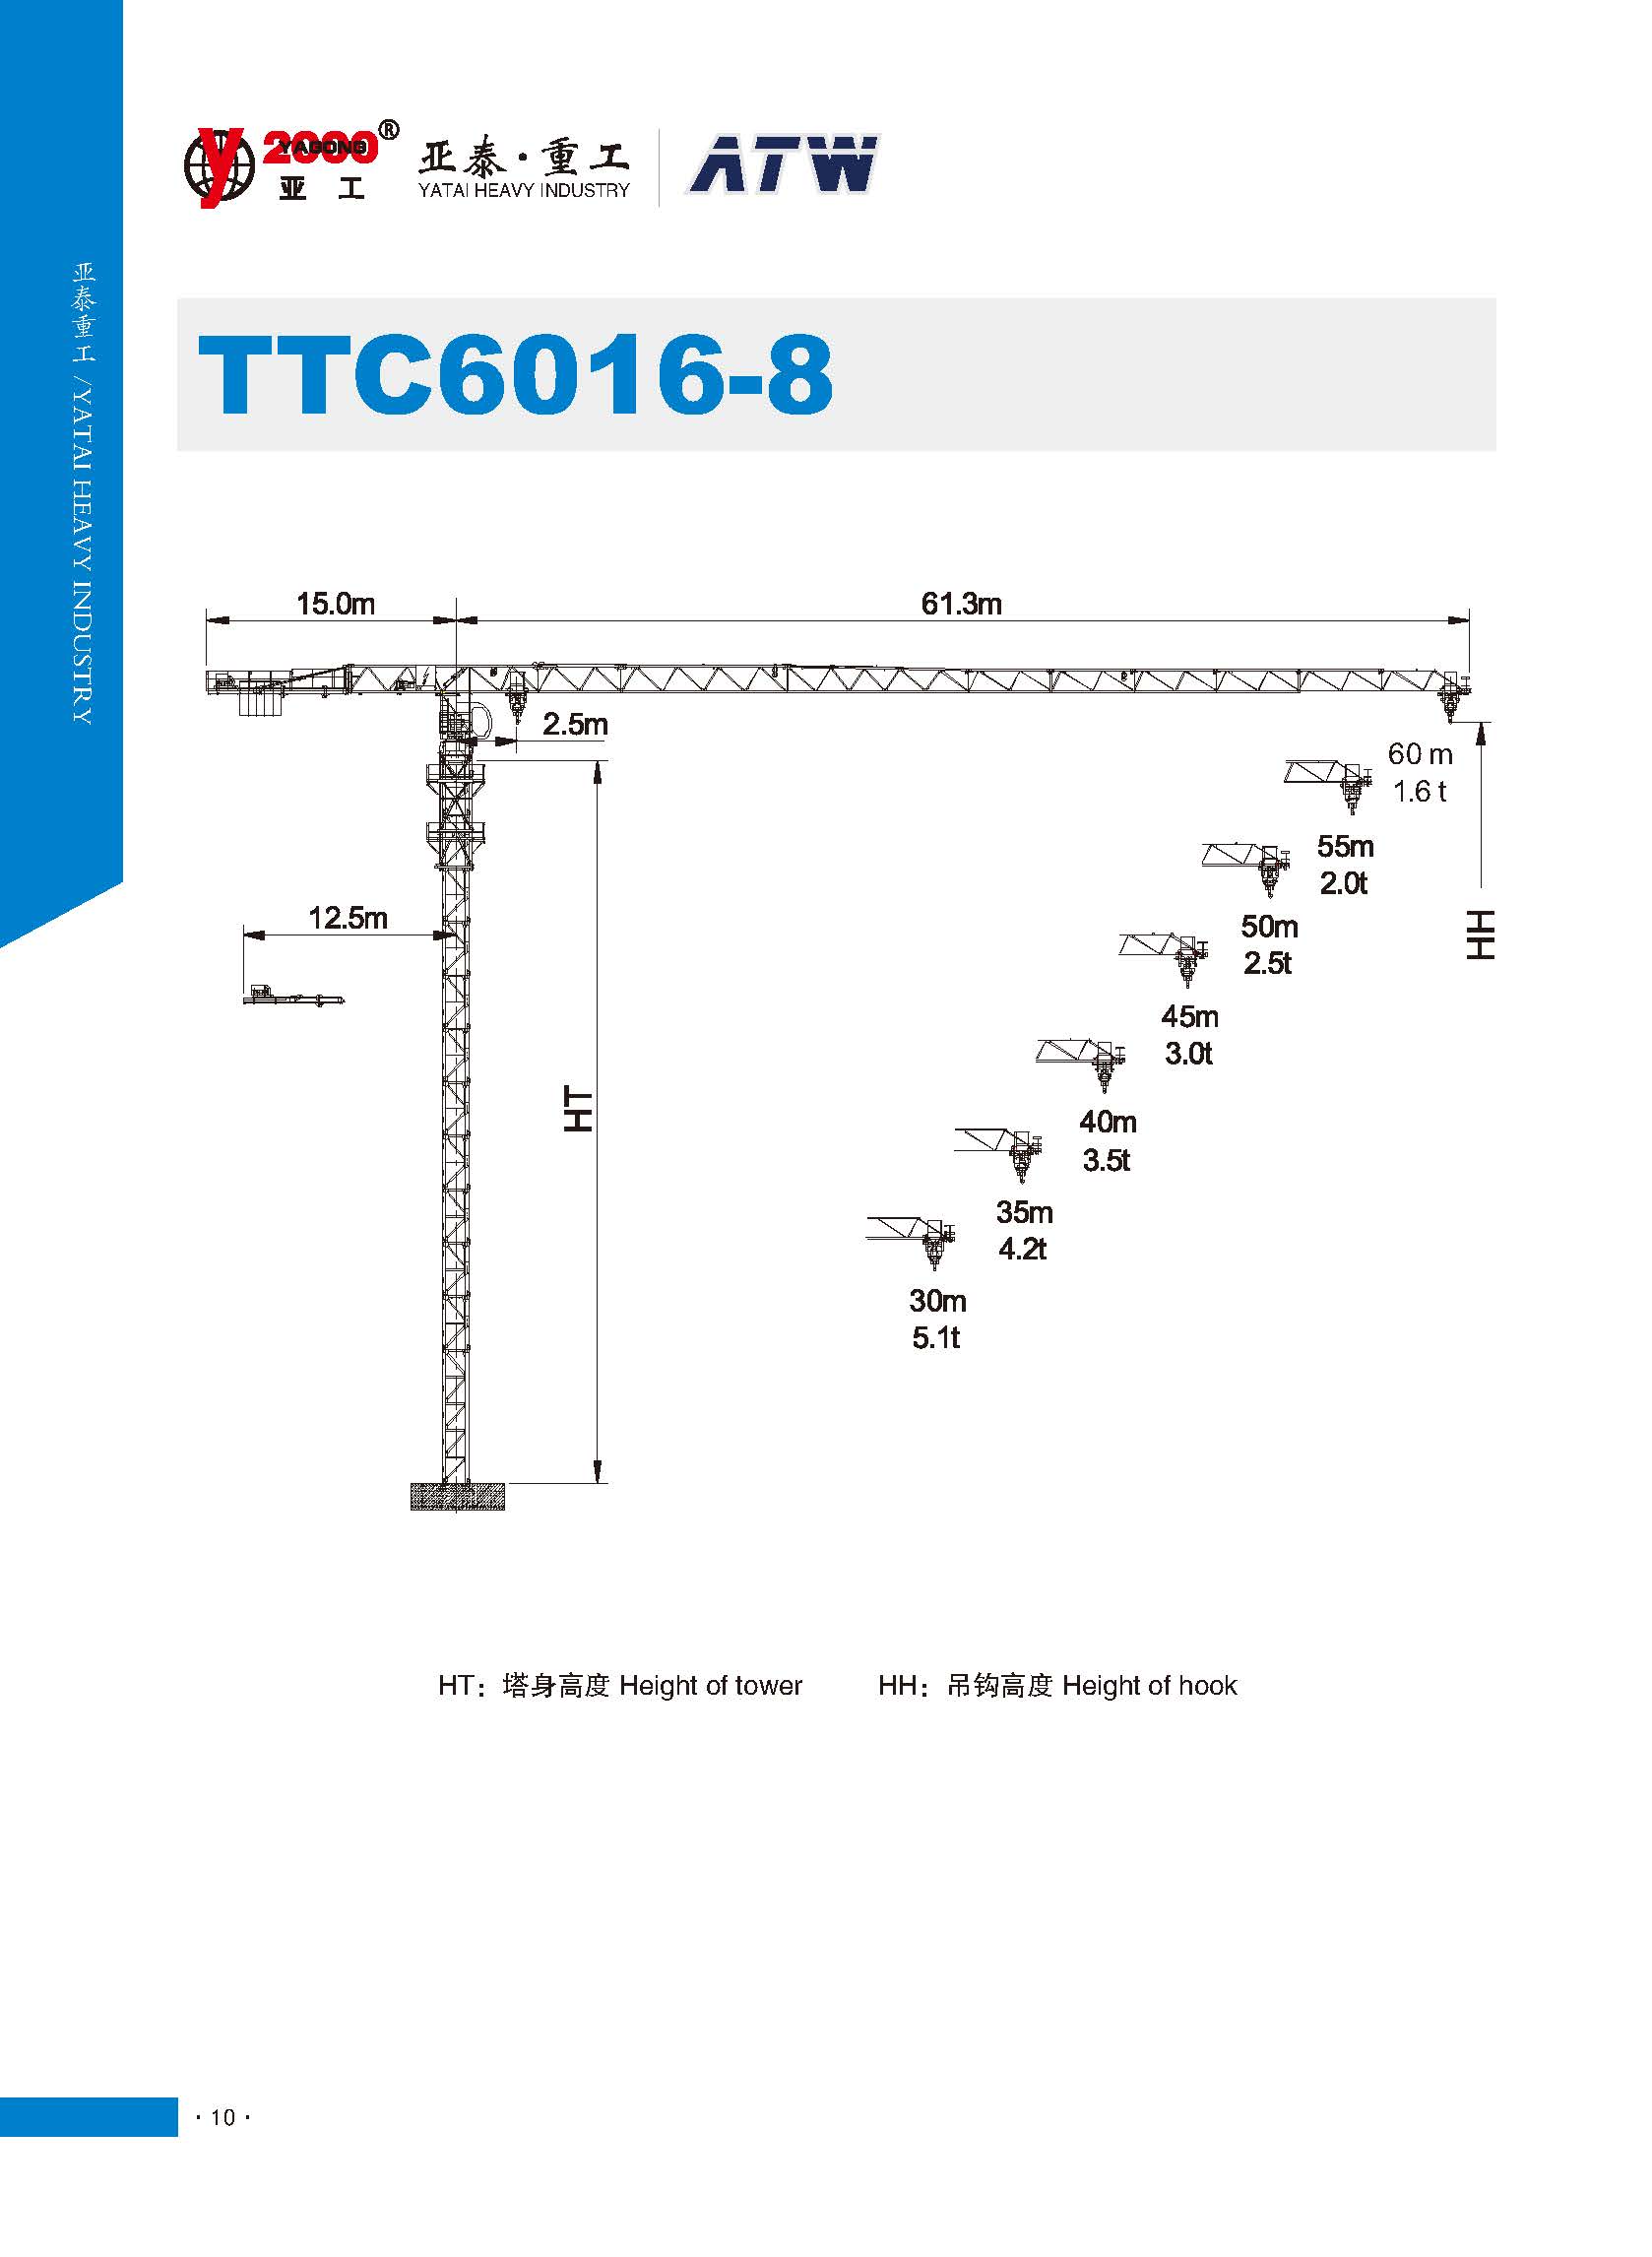 Topless Tower Crane TTC6016-8